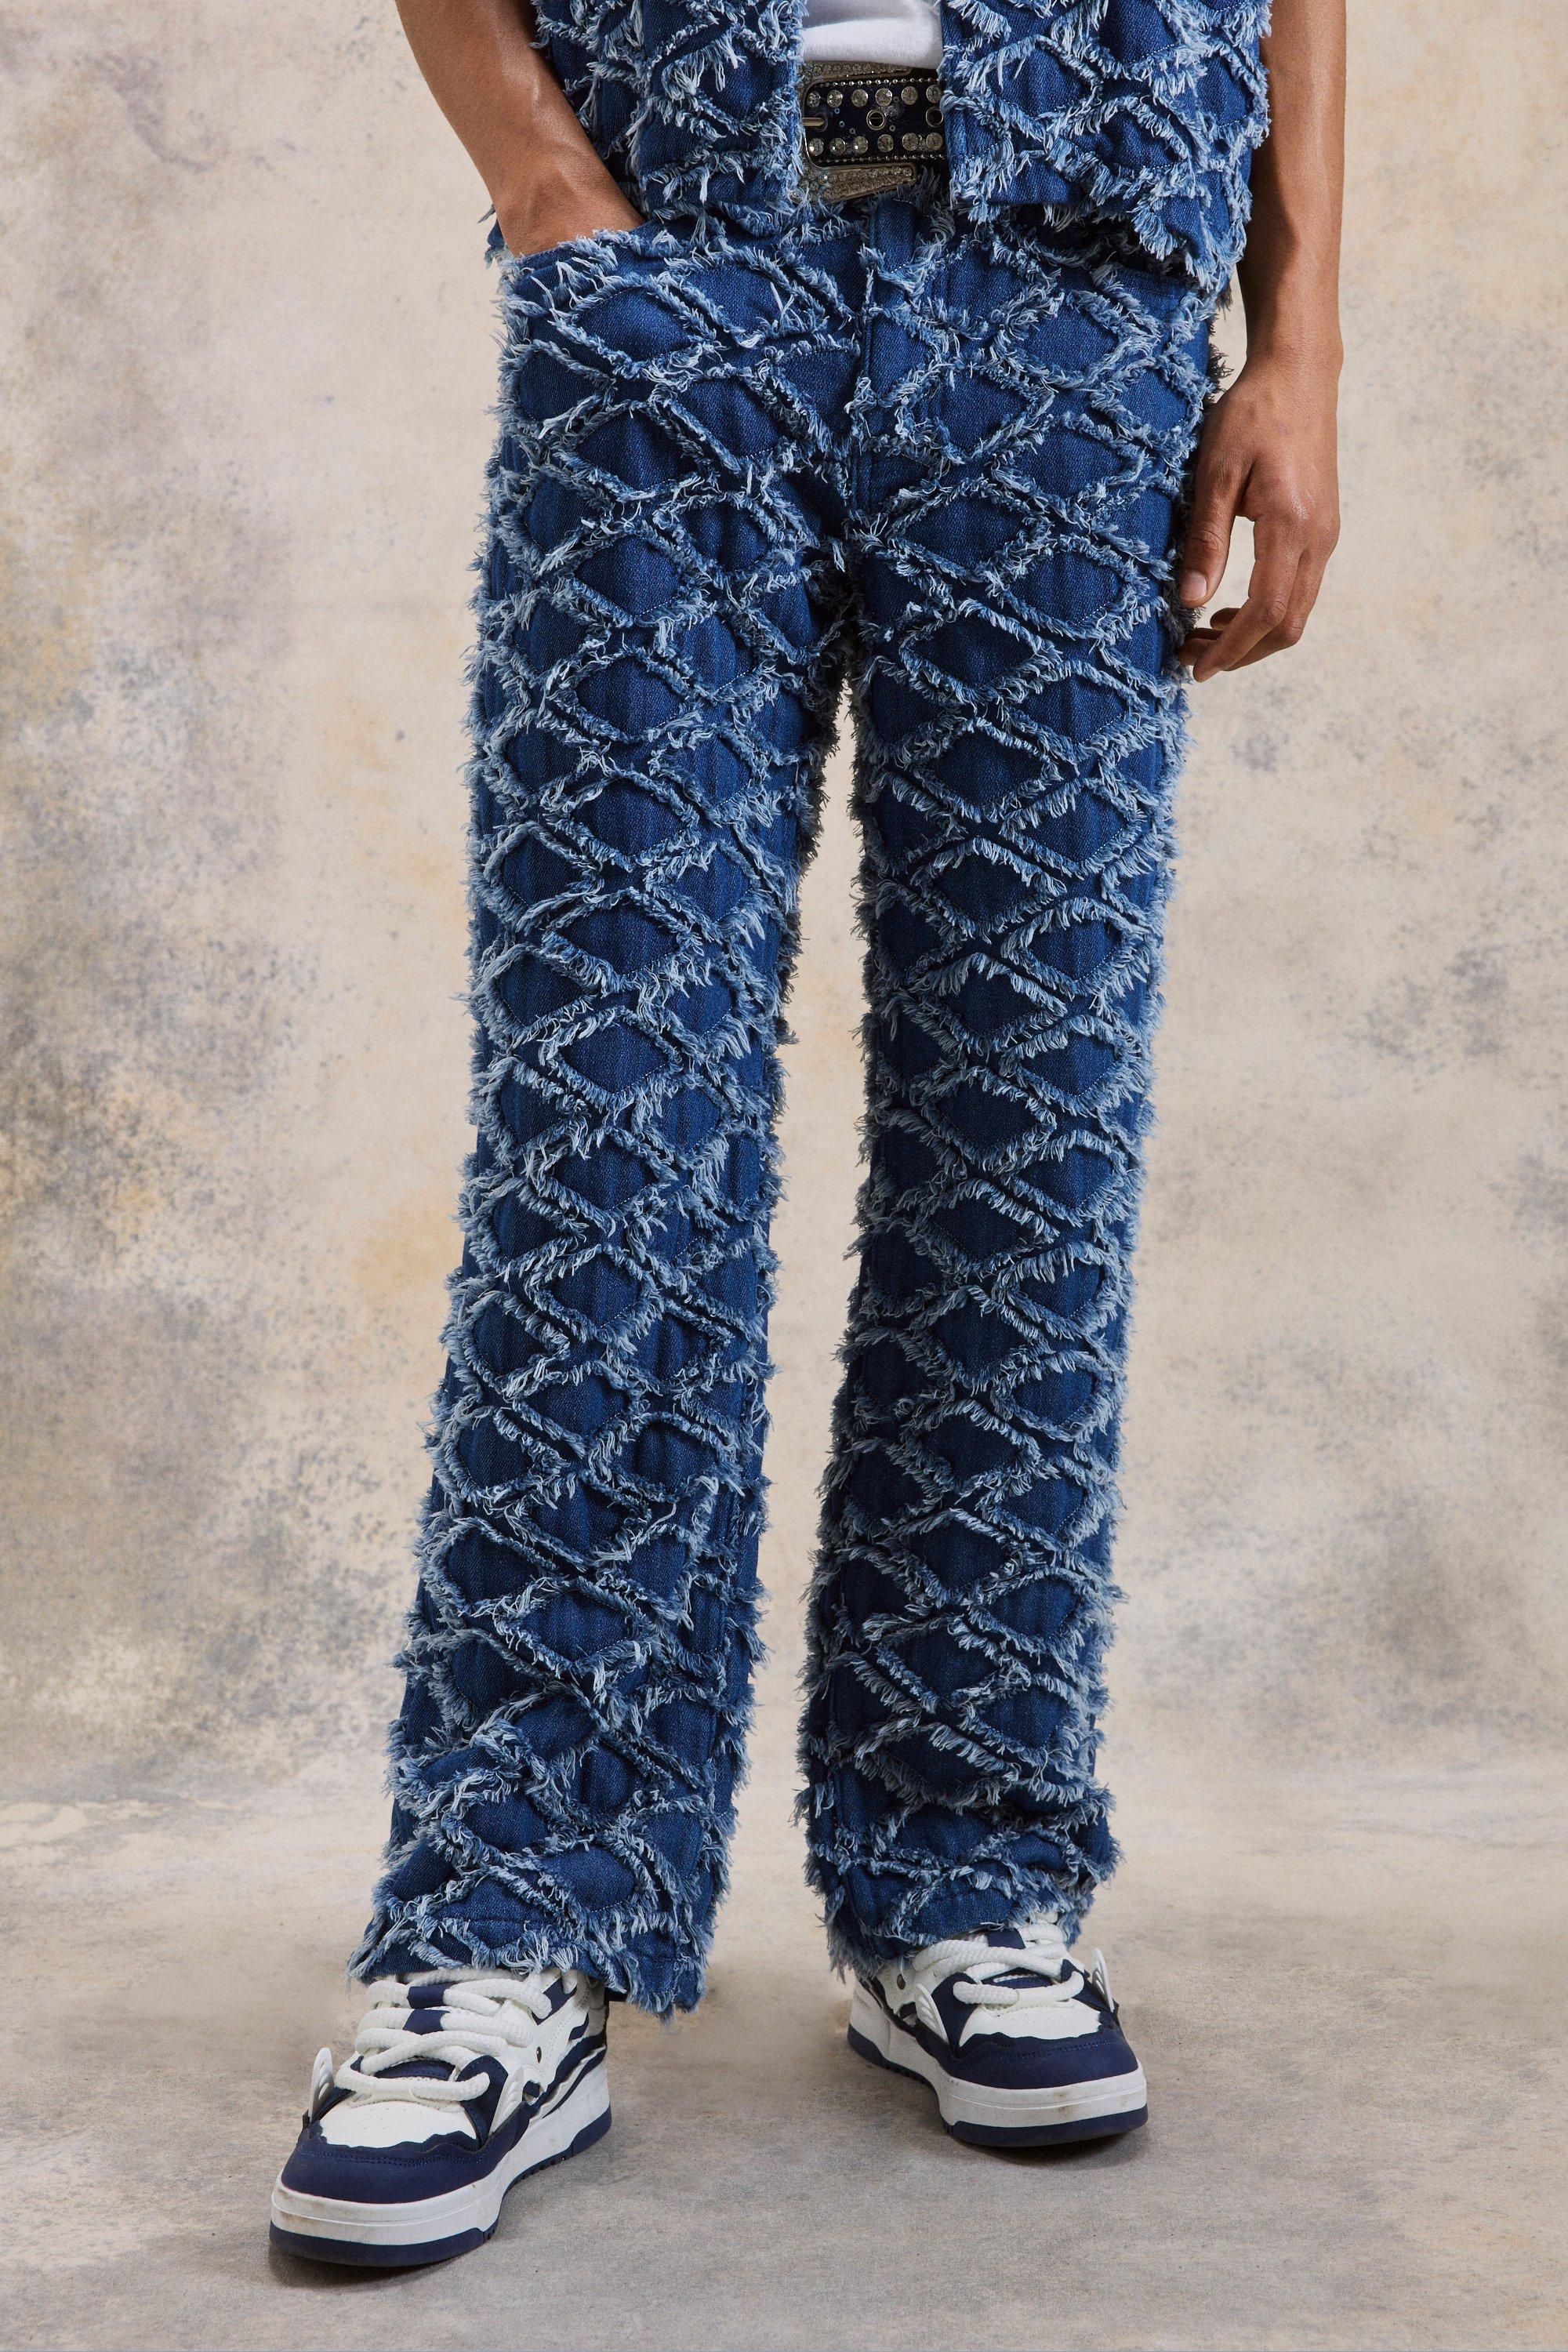 jacquard denim jeans